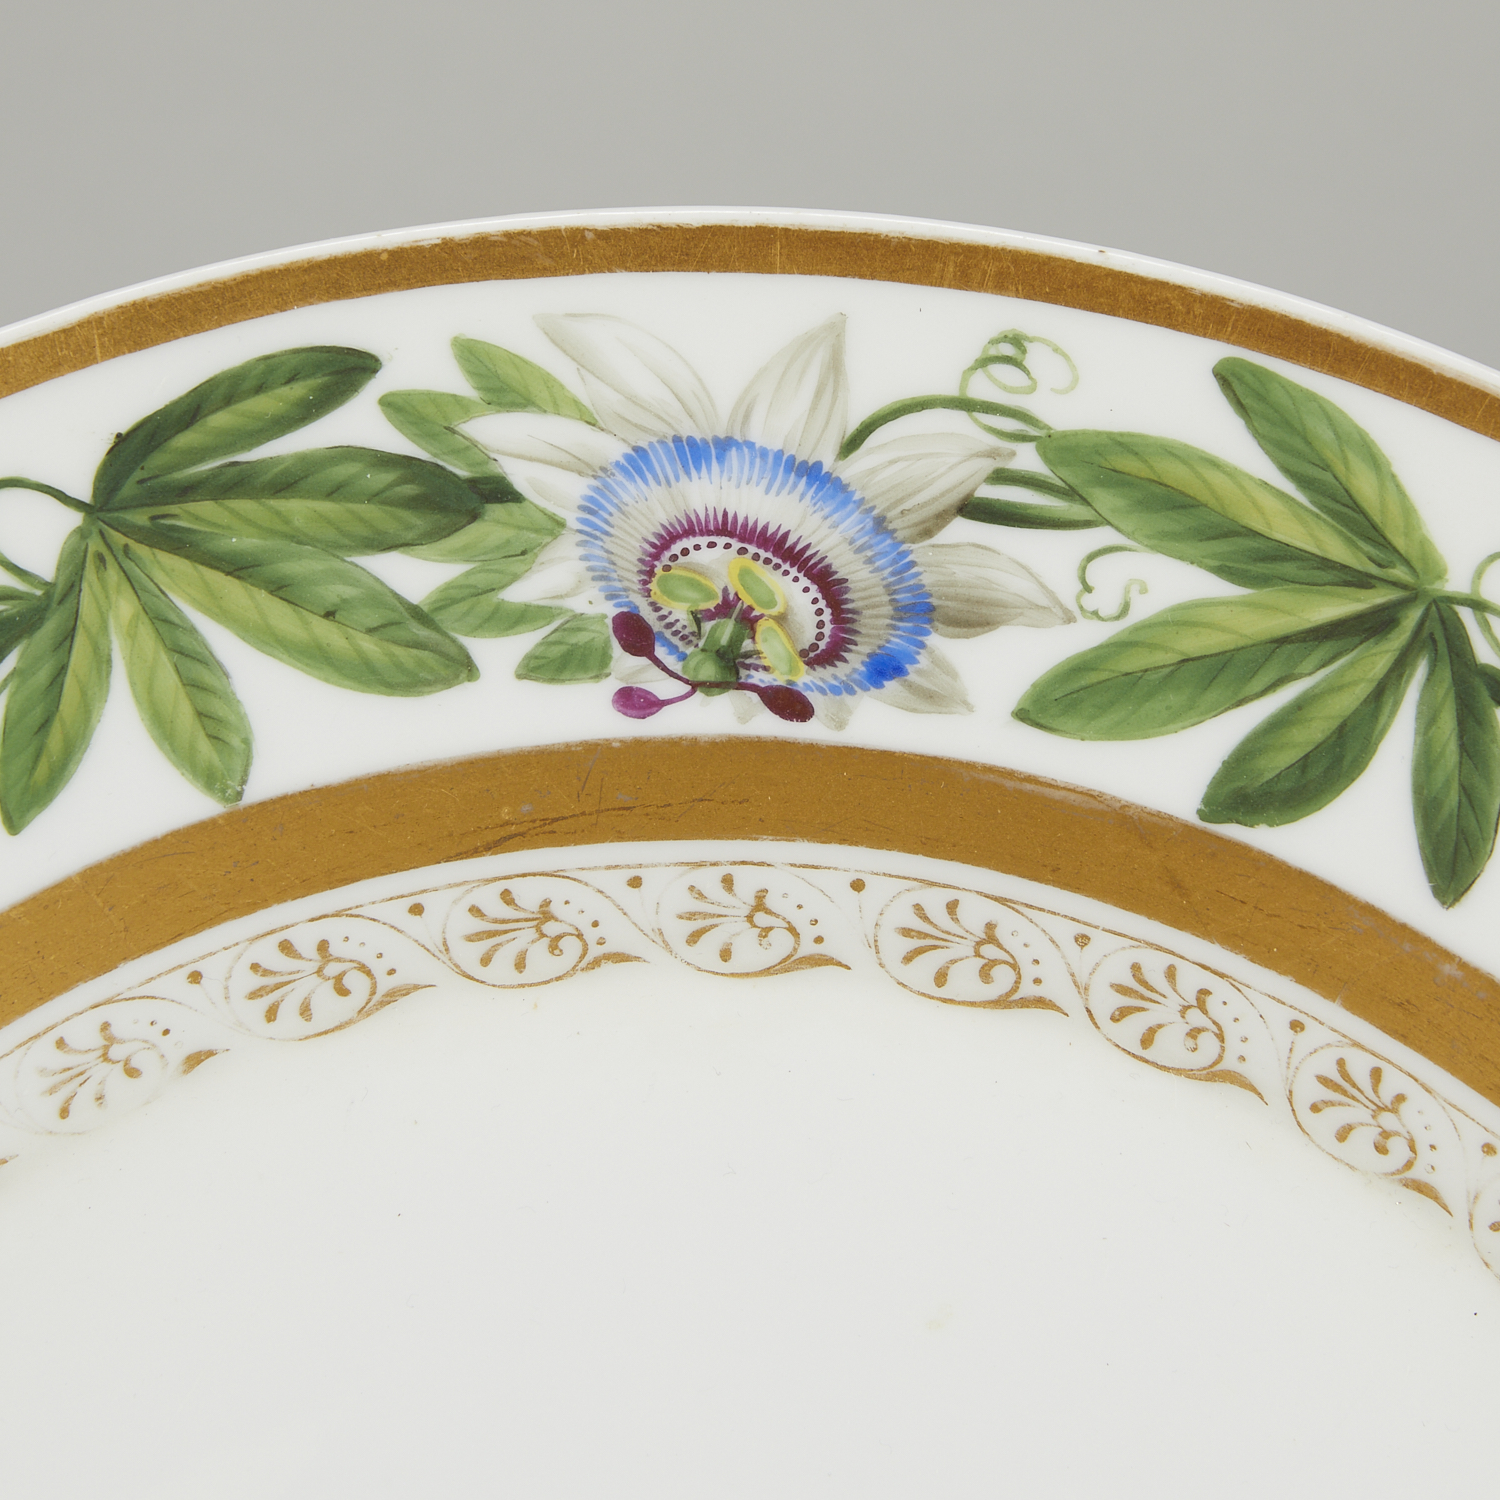 KPM Porcelain Passion Flower Charger - Image 5 of 6